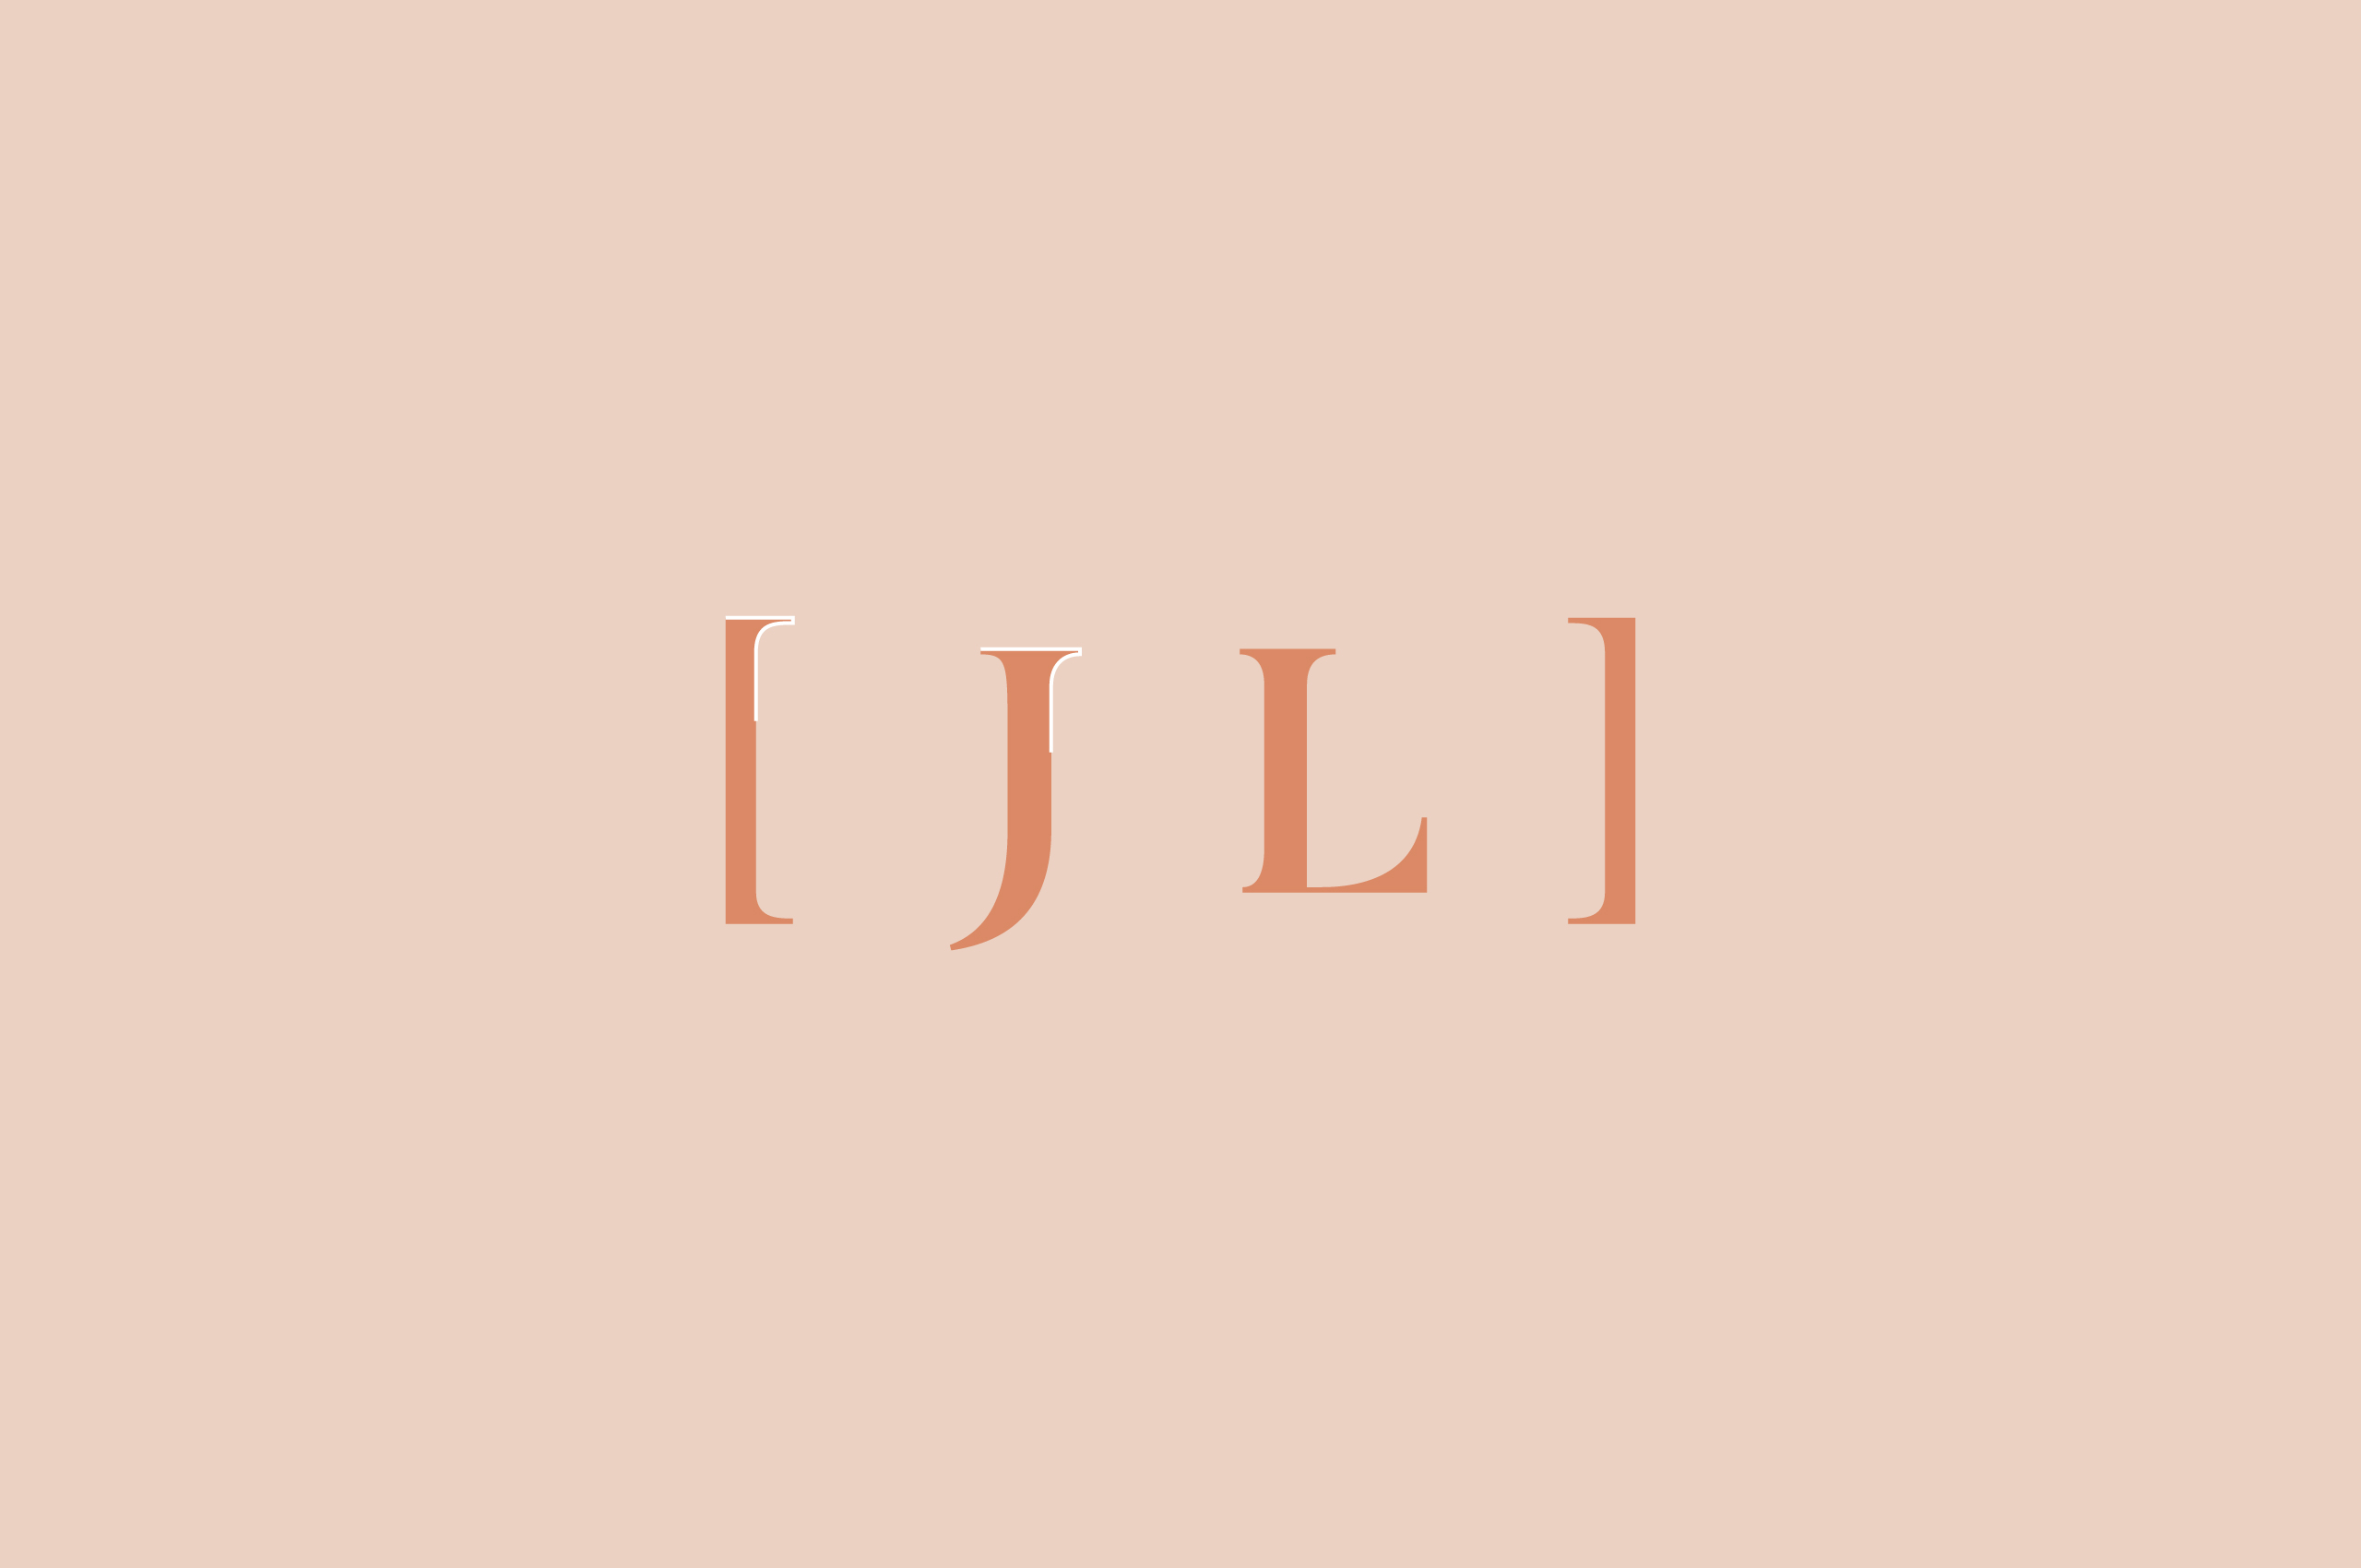 Juliet-Lloyd-website-image-7.2